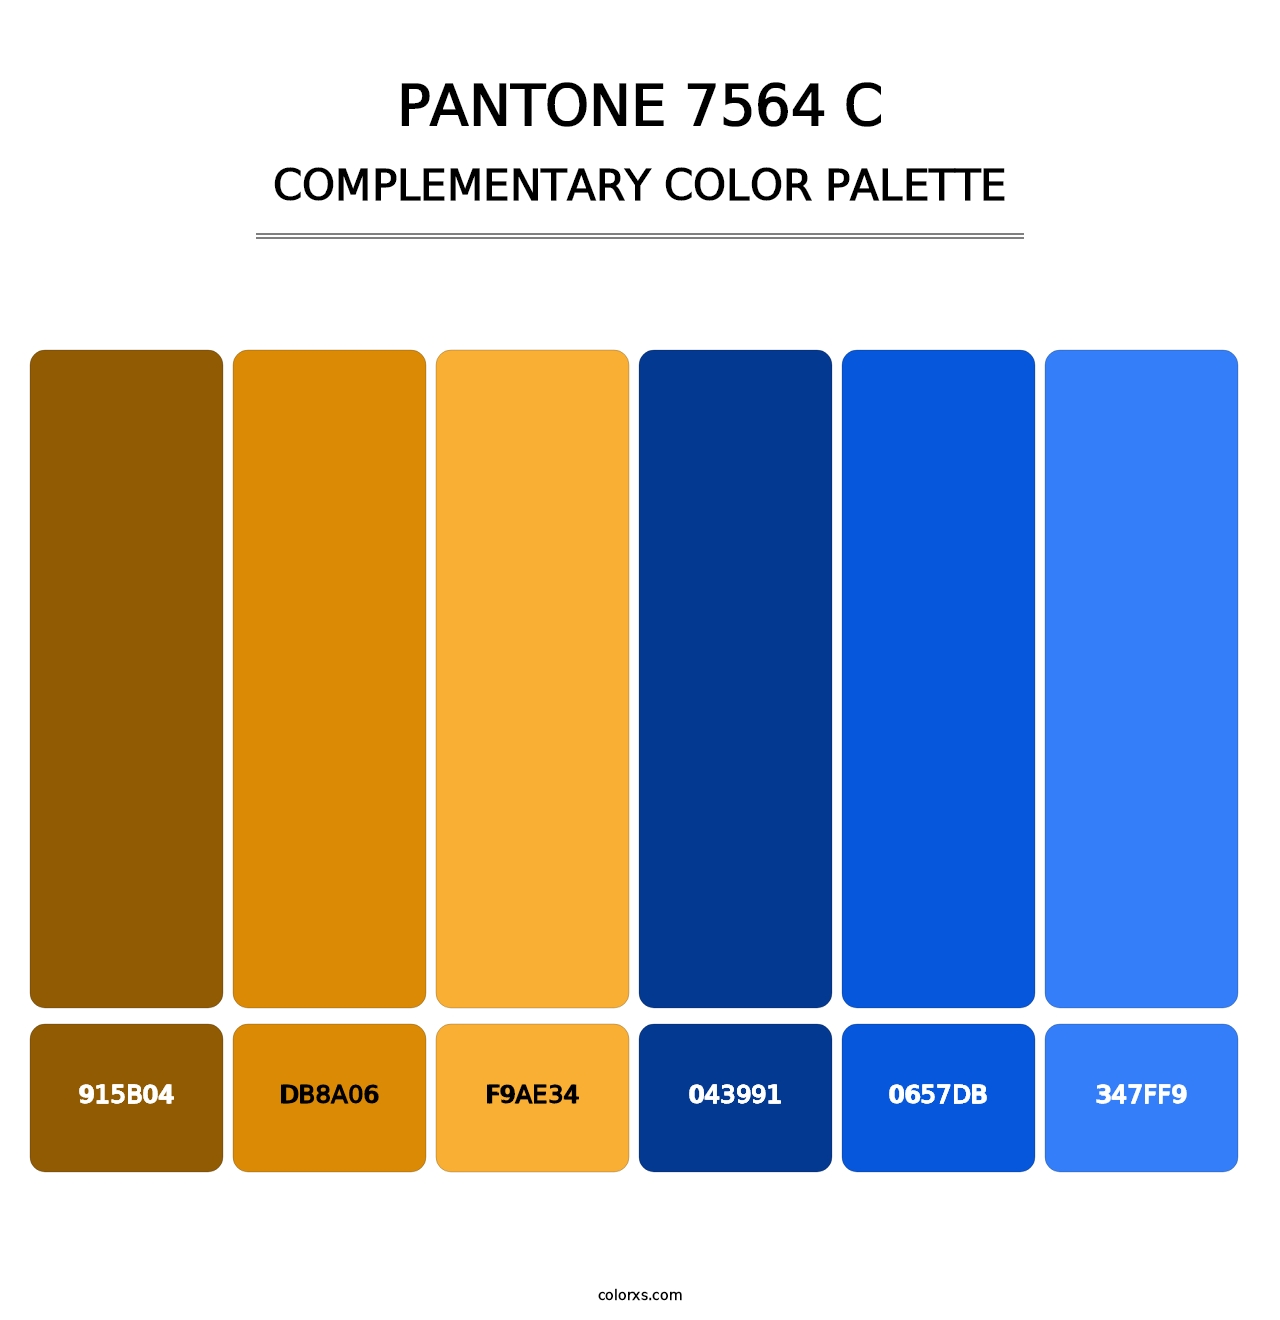 PANTONE 7564 C - Complementary Color Palette